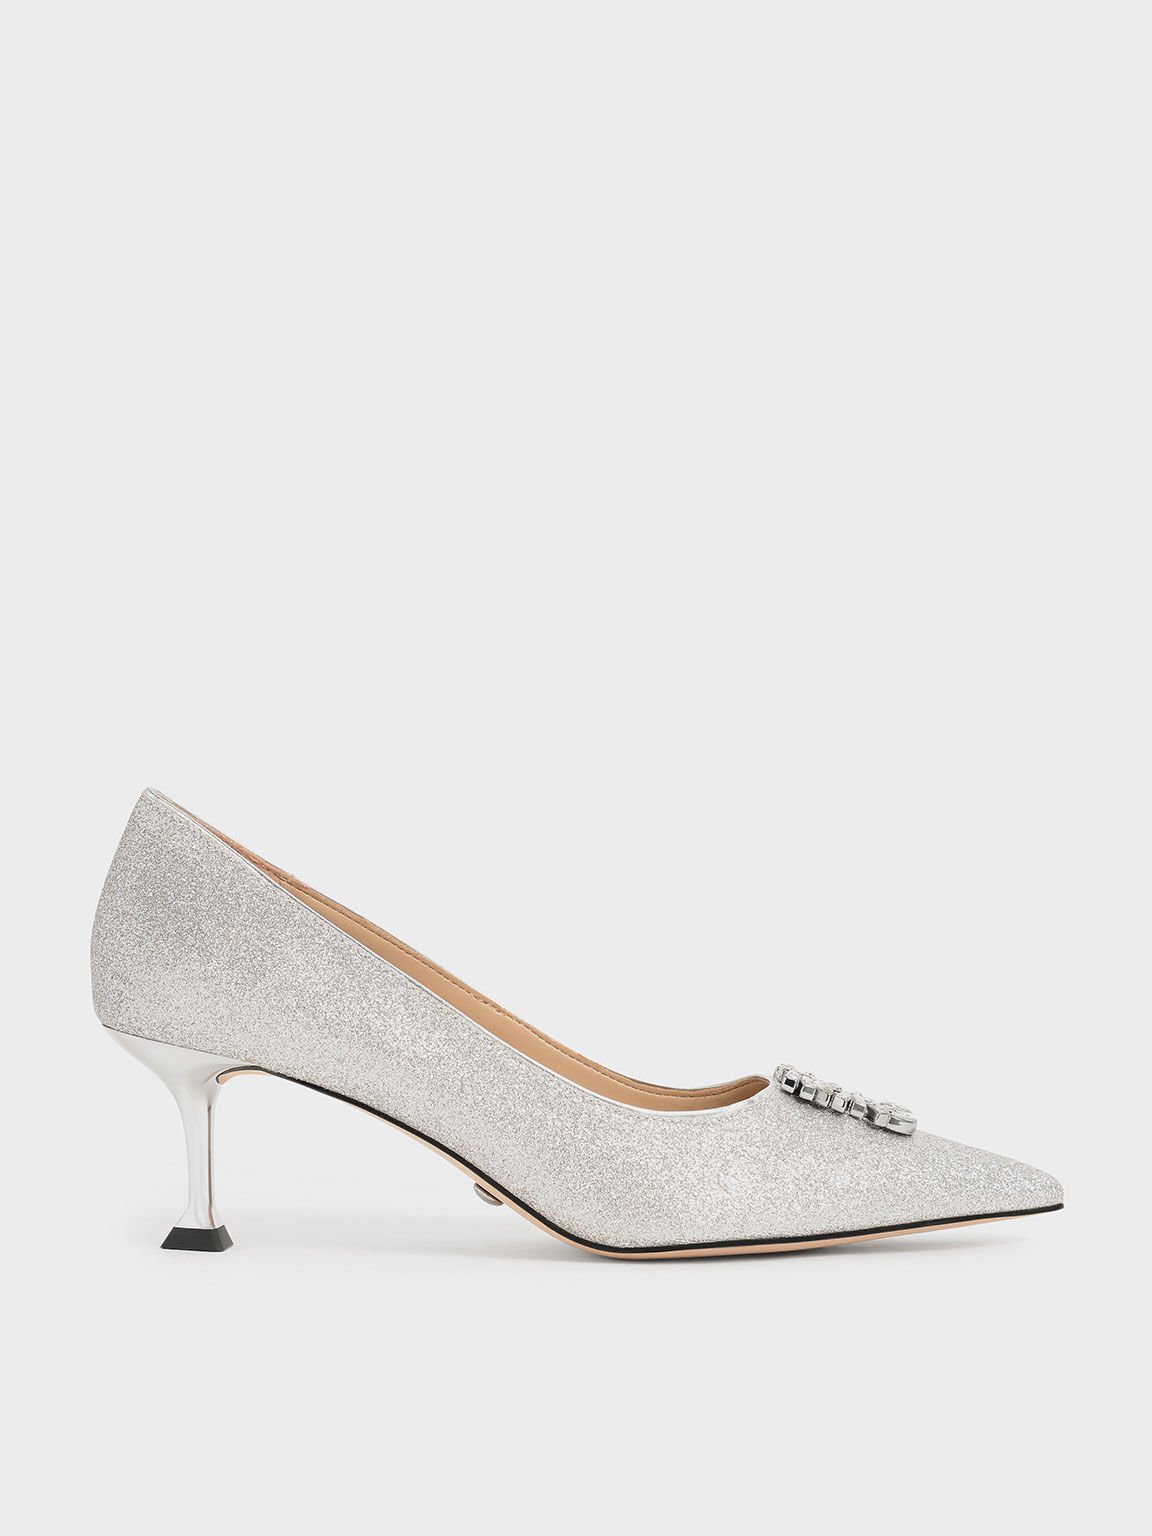 Godiva Pump Grey- Silver Glitter Pump Heels – Sergio Rossi